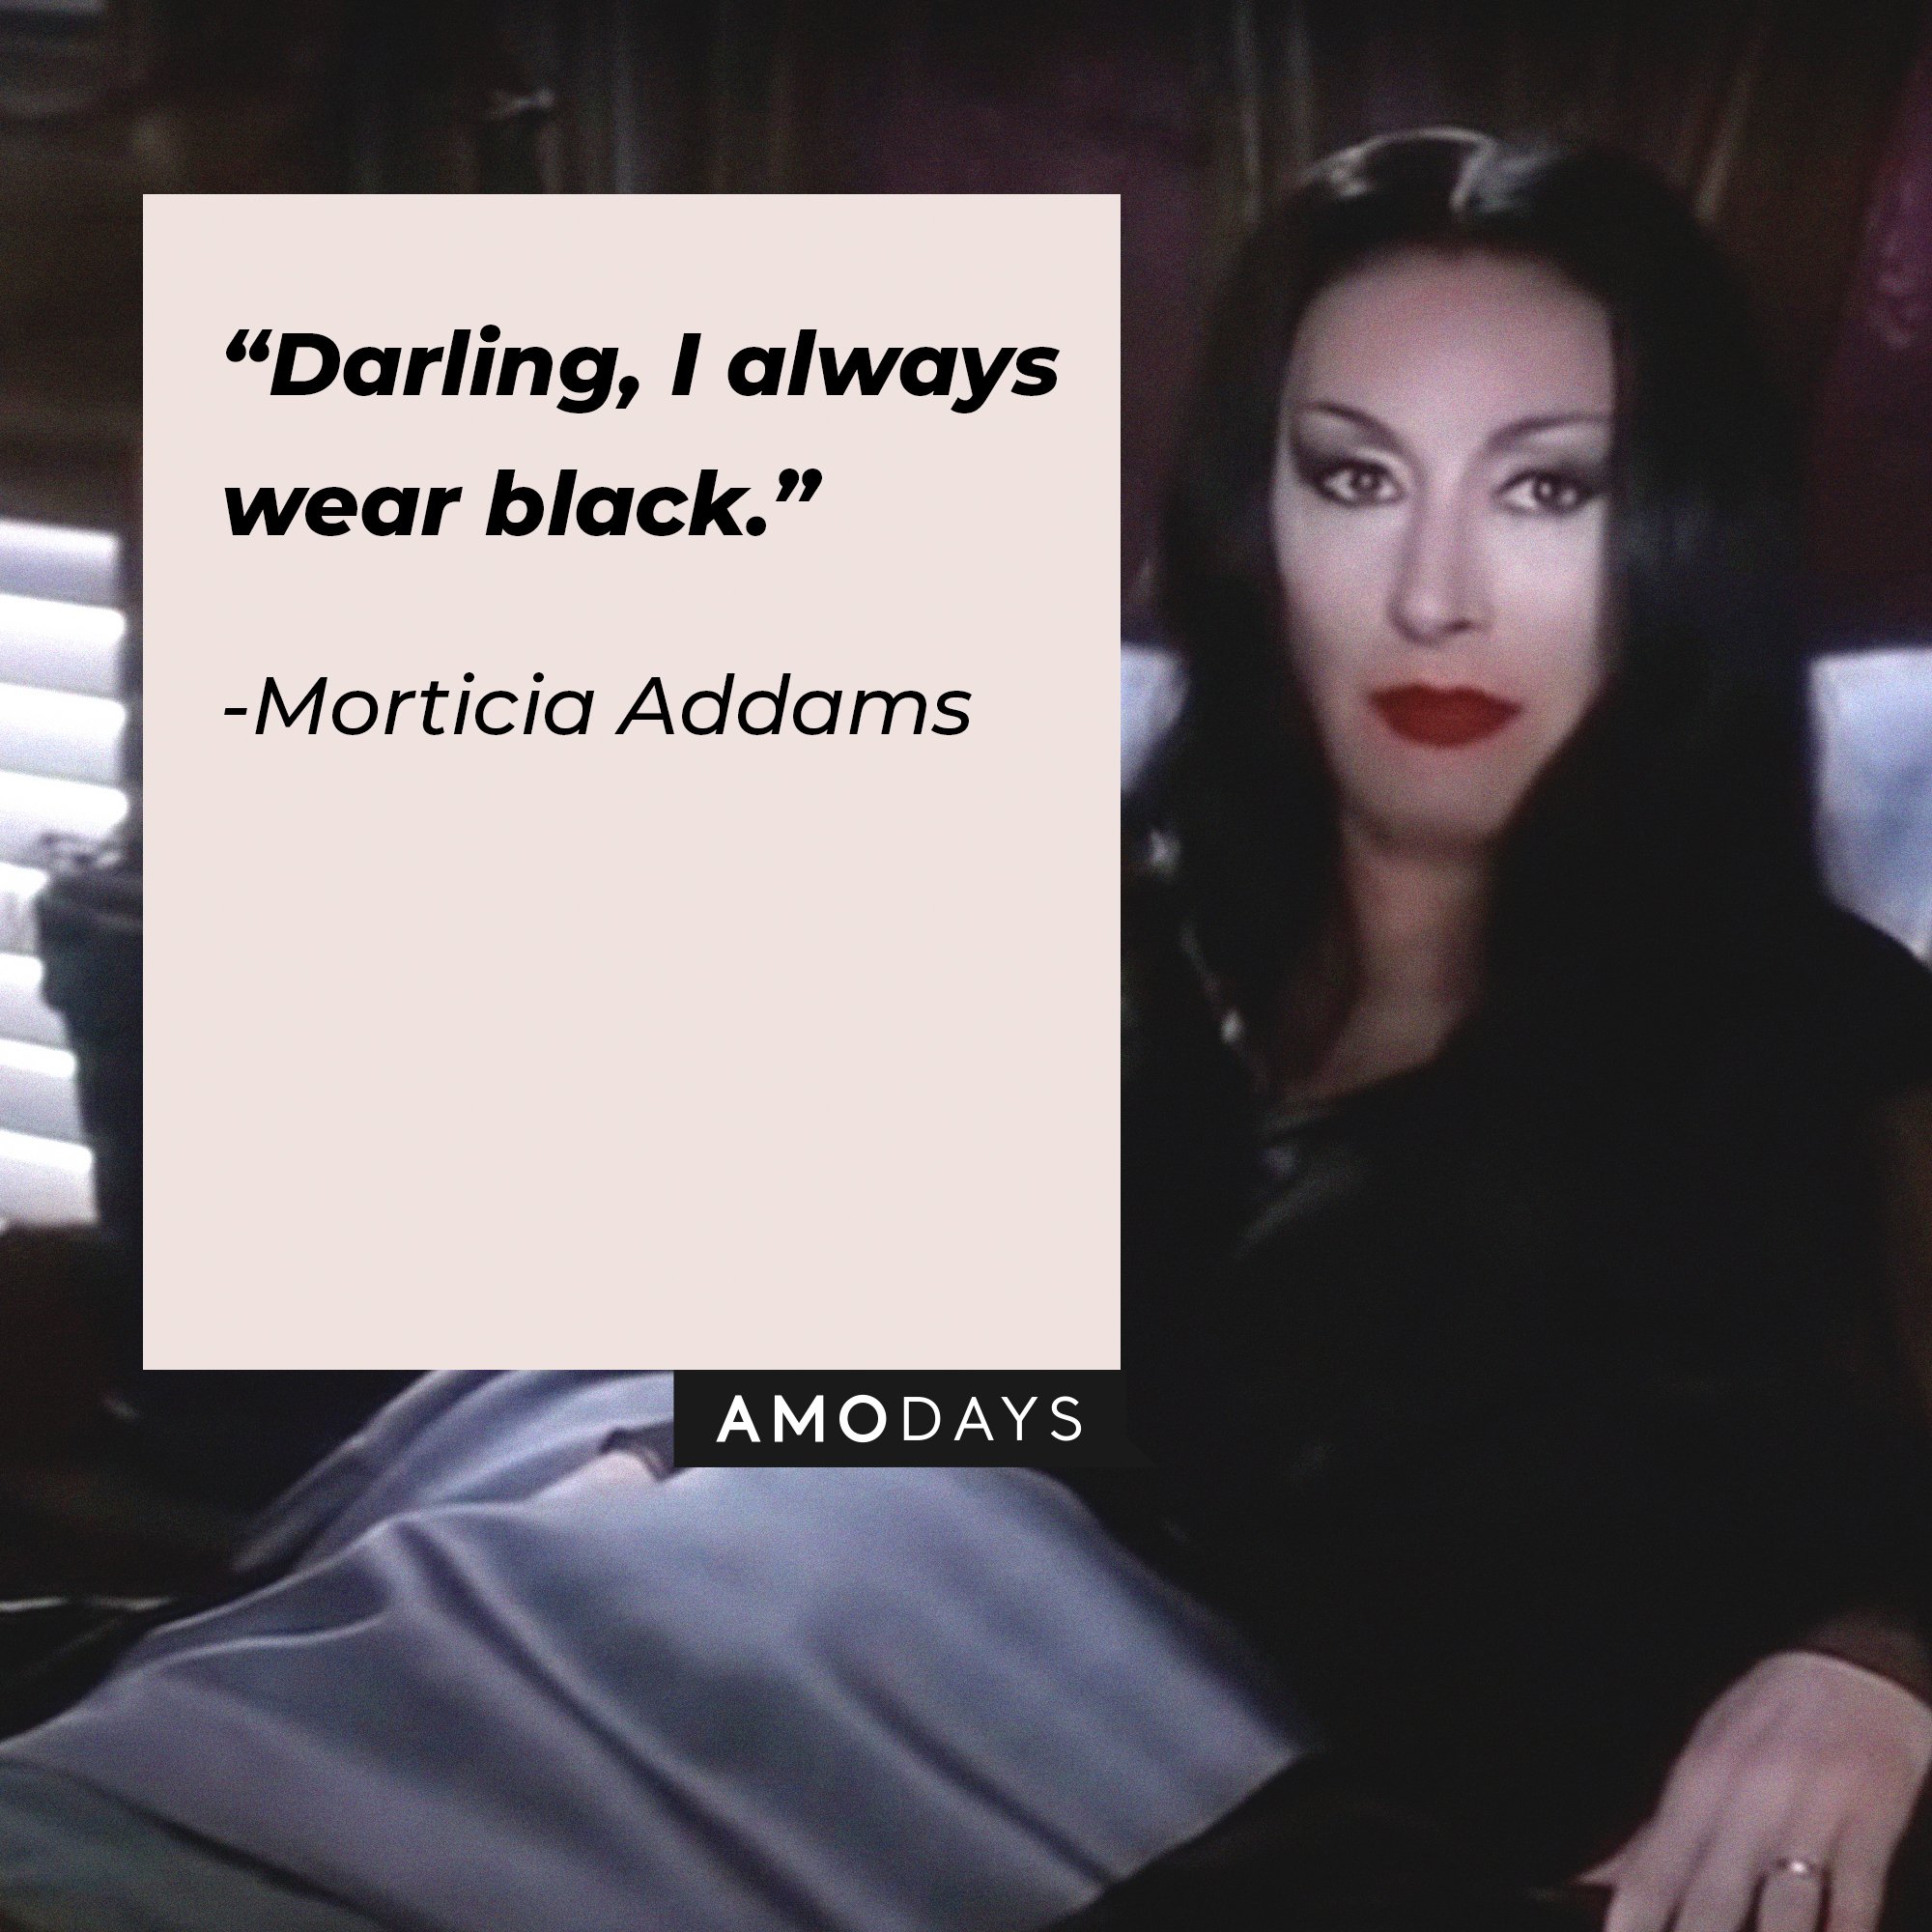 Morticia Addams’ quote: “Darling, I always wear black.” | Image: AmoDays